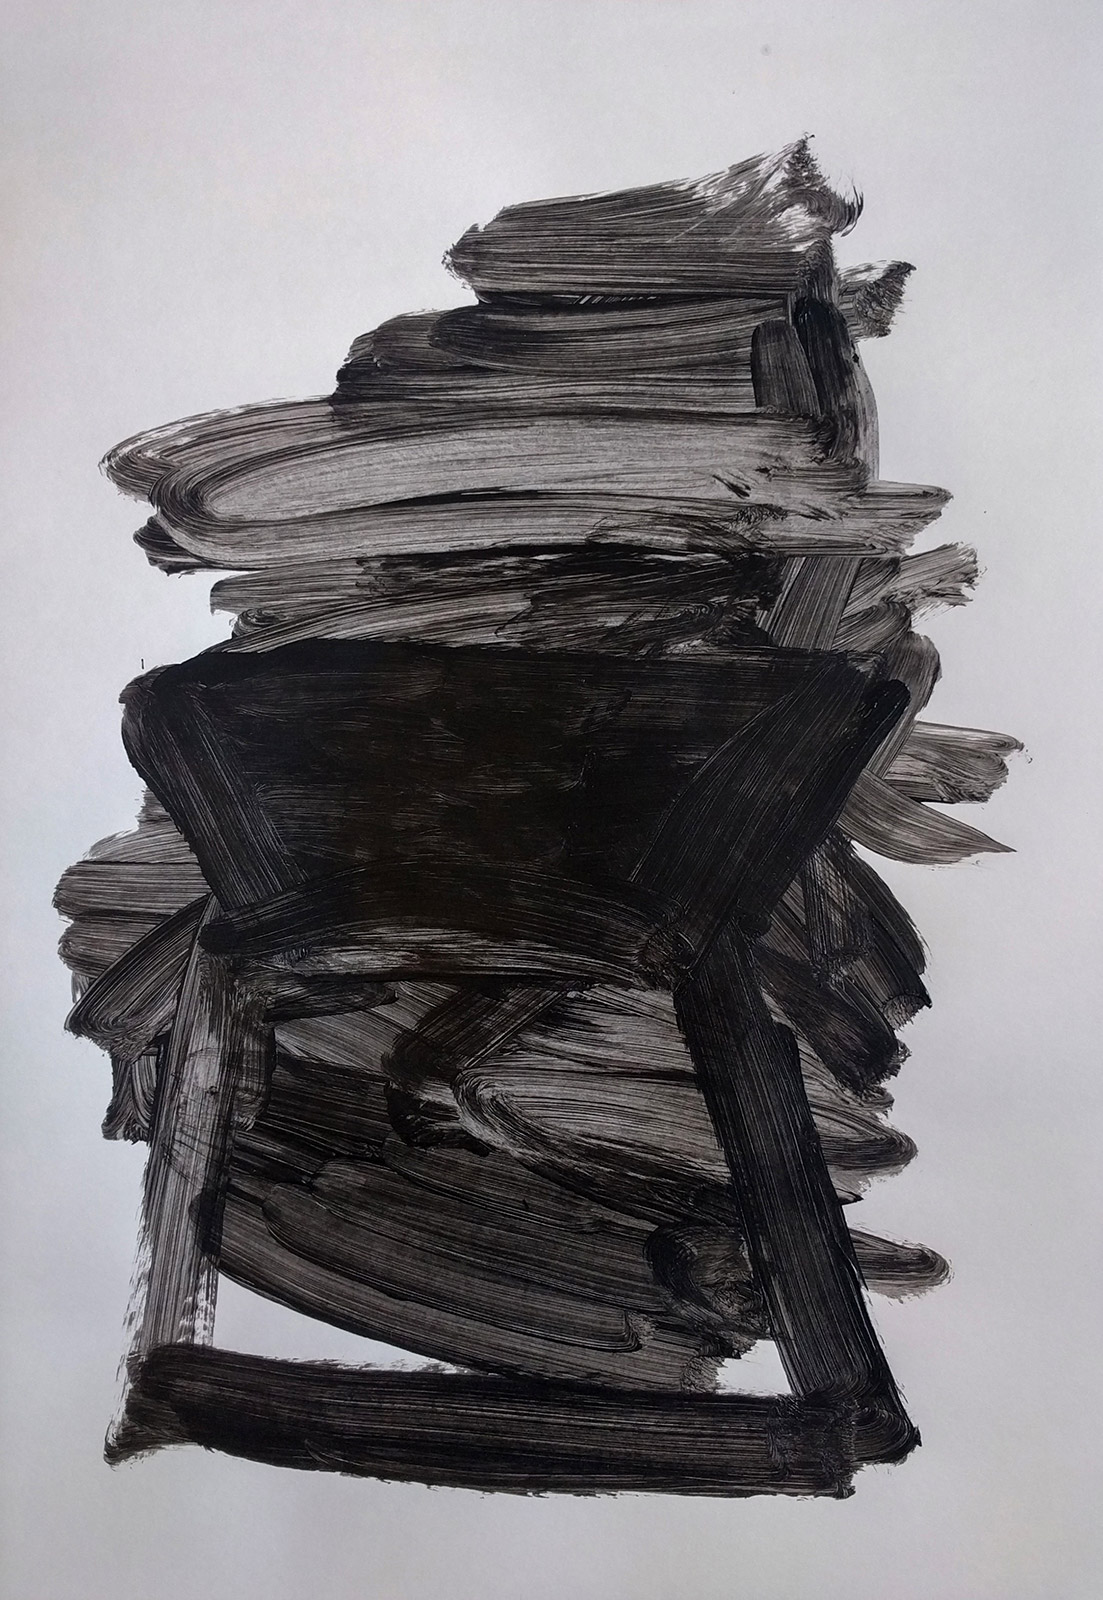 Blackout drawing - black acrylic on plain white paper. 